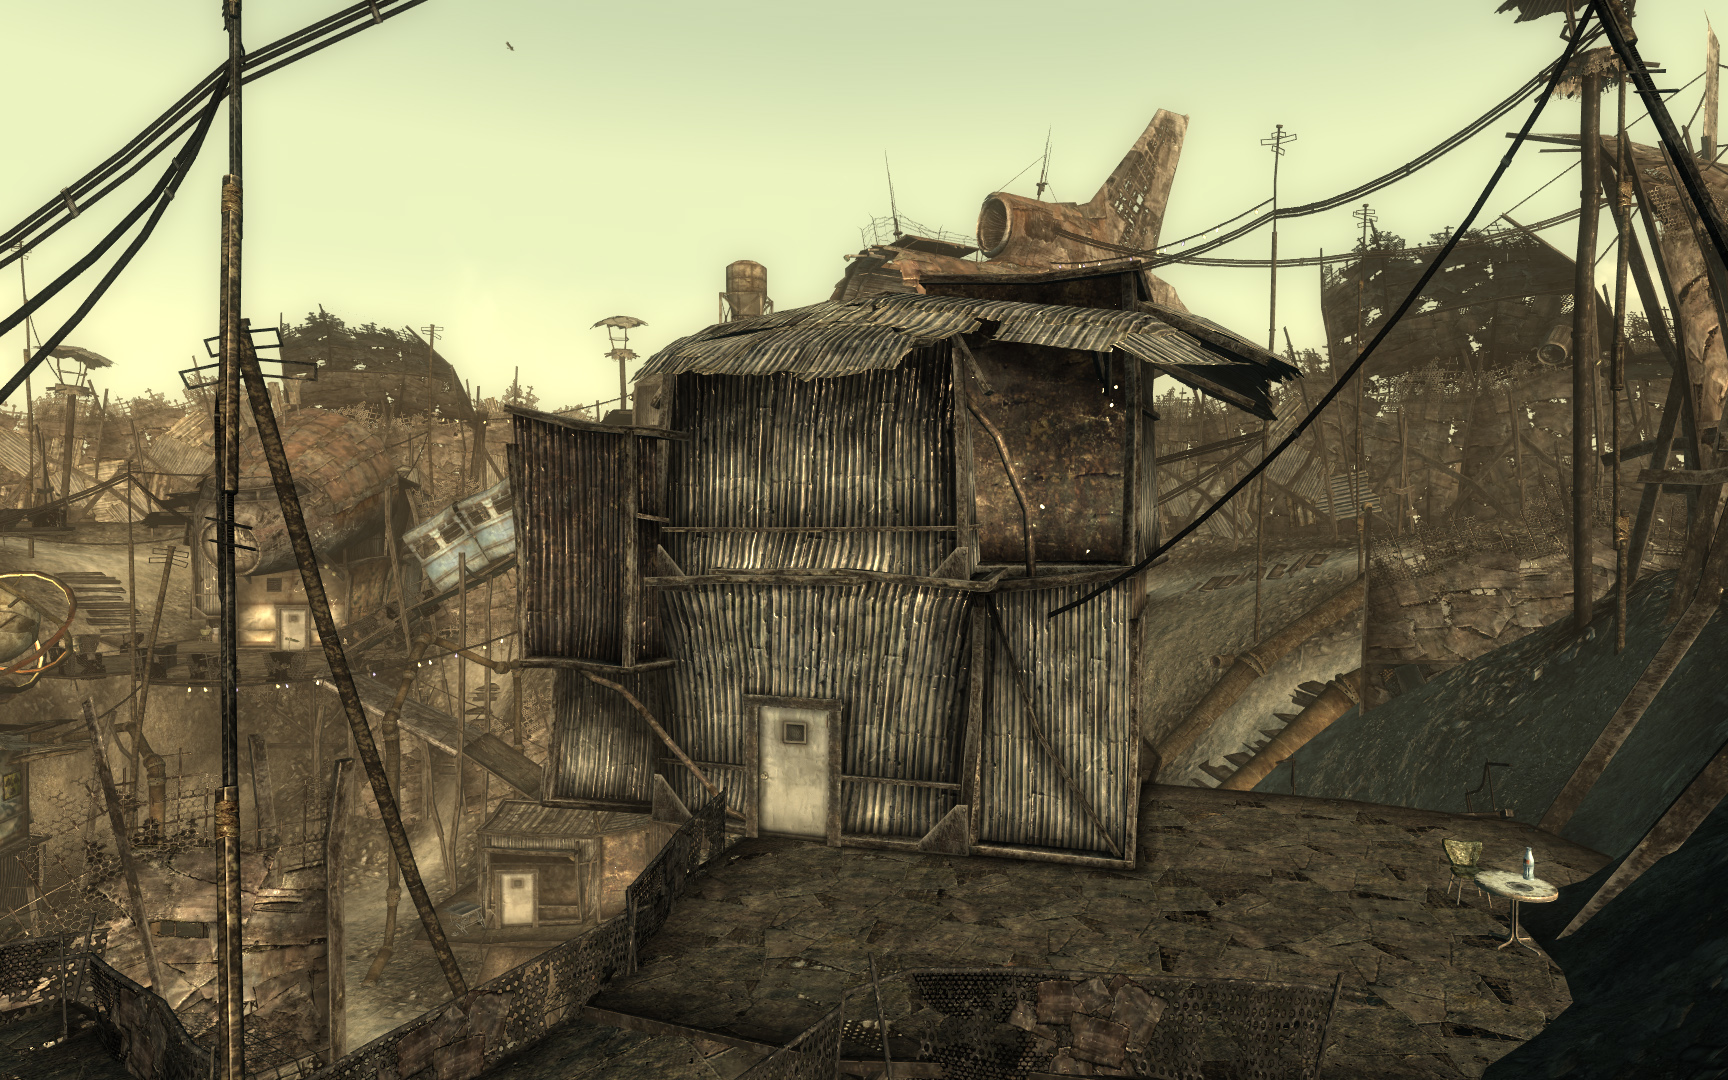 fallout 3 megaton house mod